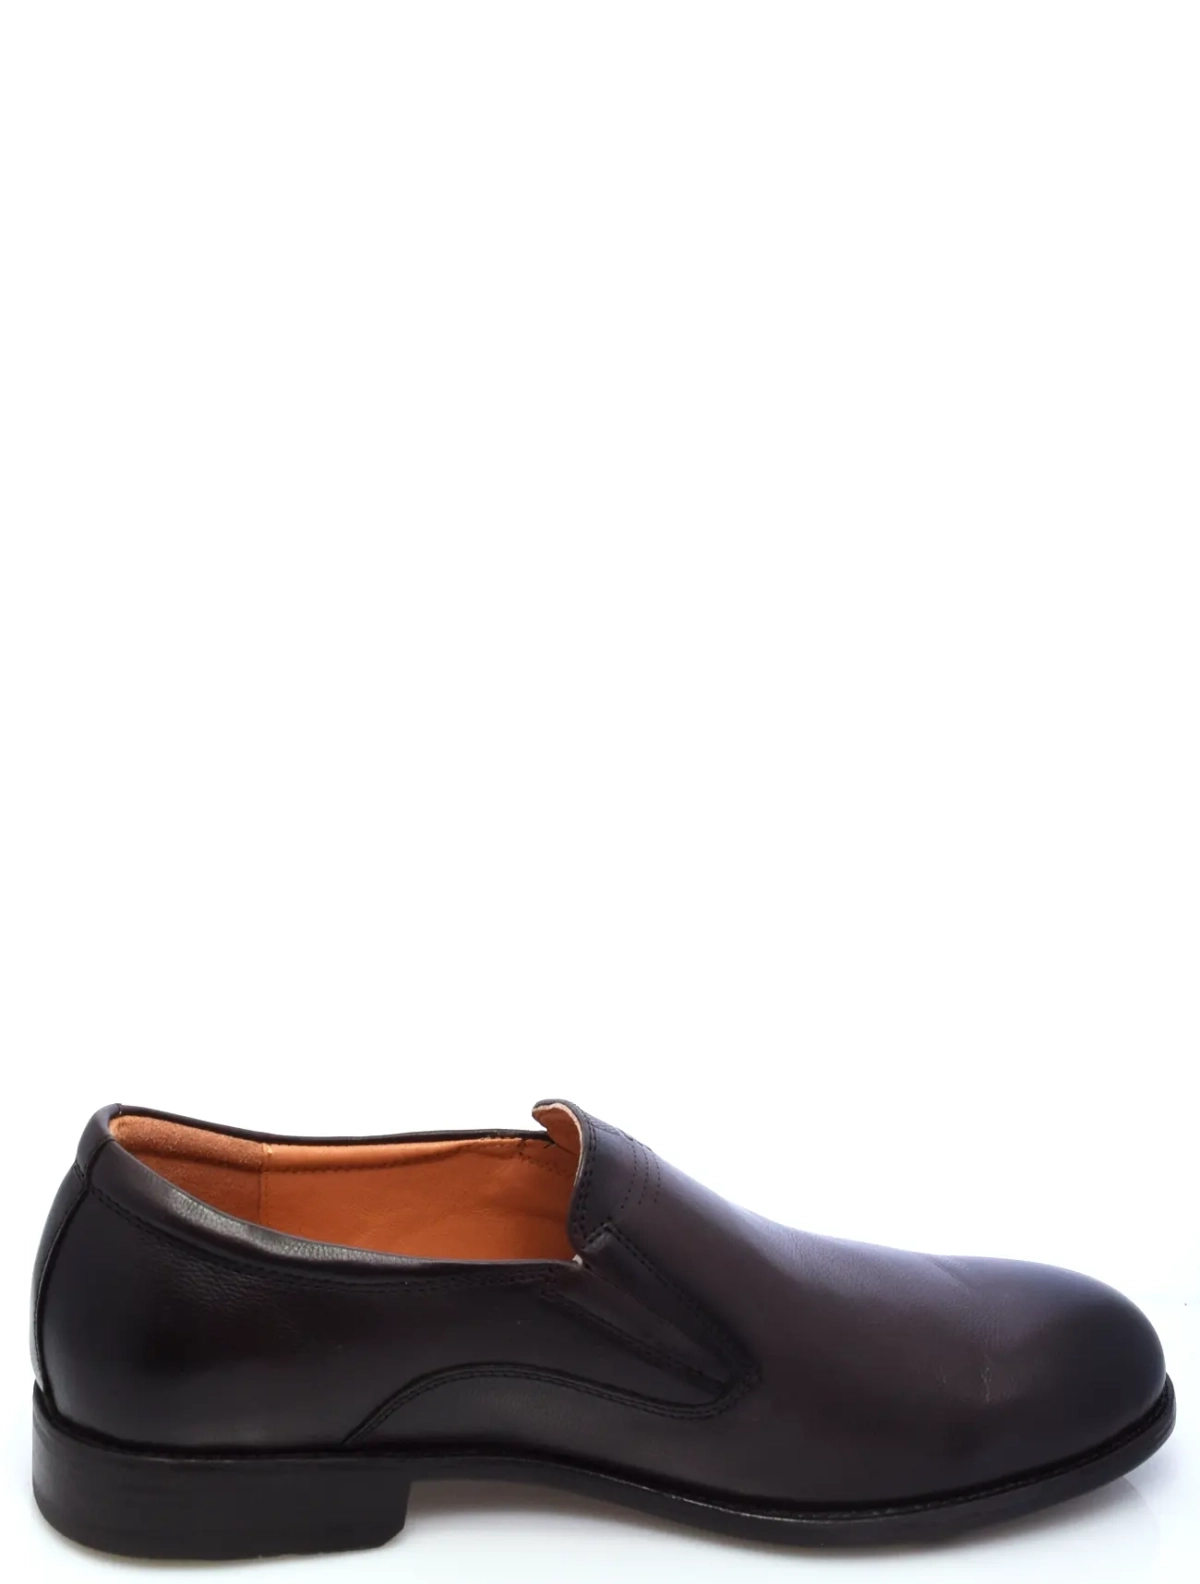 Roscote K026E-26-741-T4767 мужские туфли